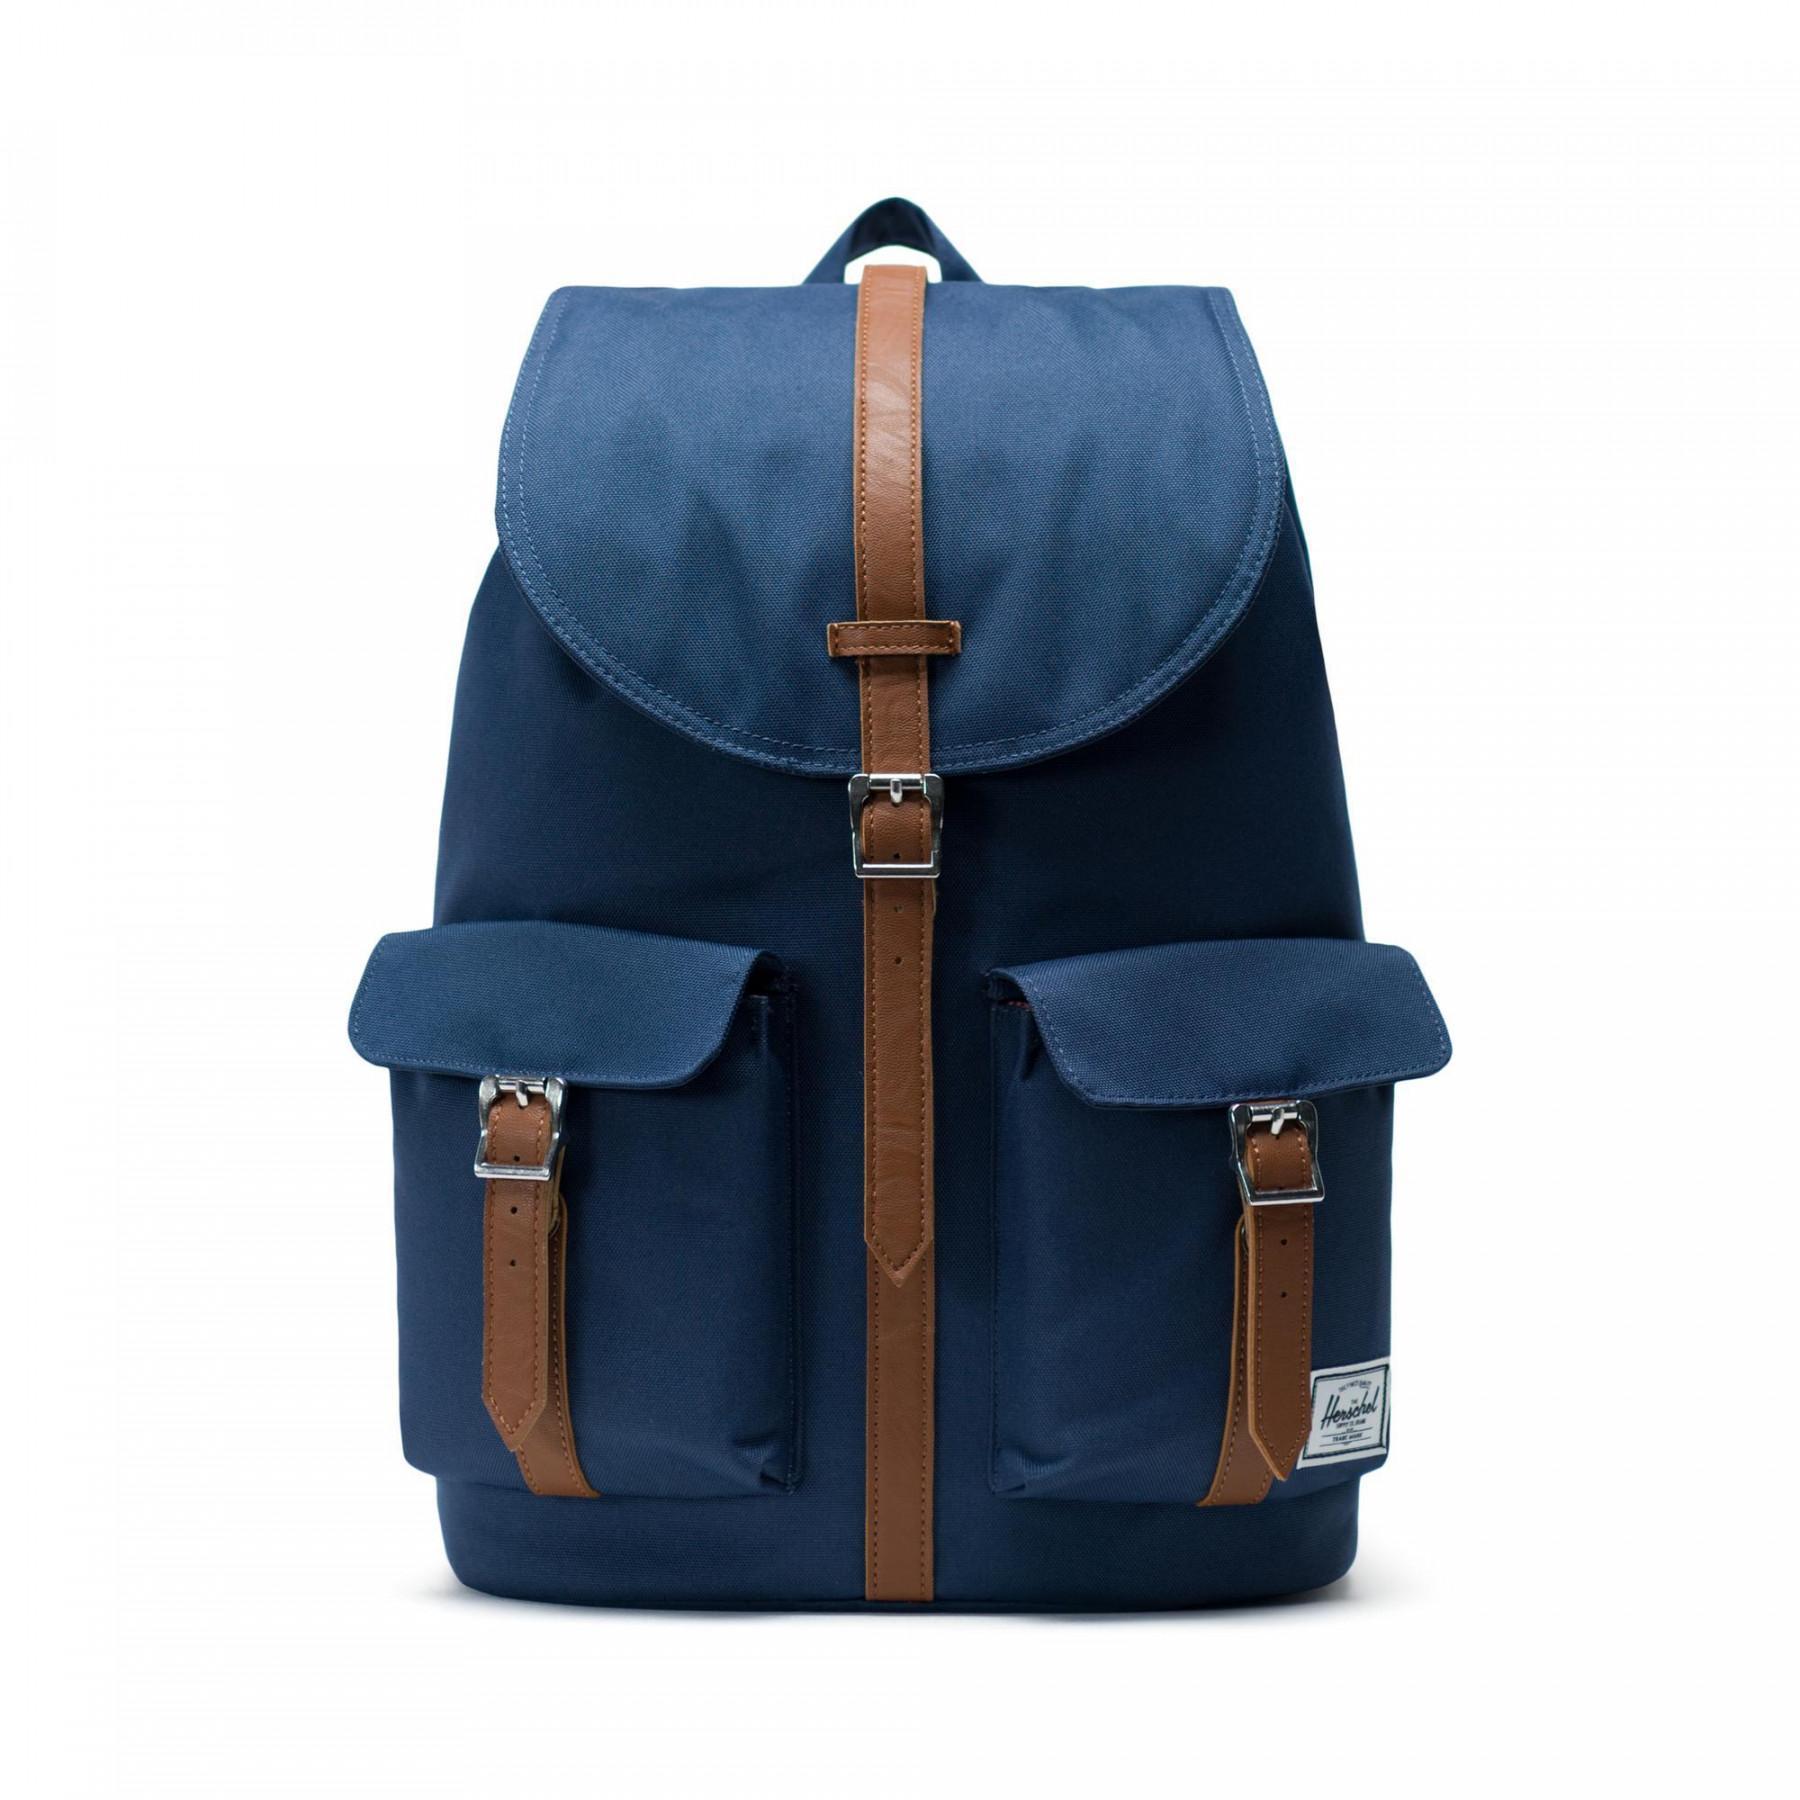 Backpack Herschel dawson navy/tan synthetic leath